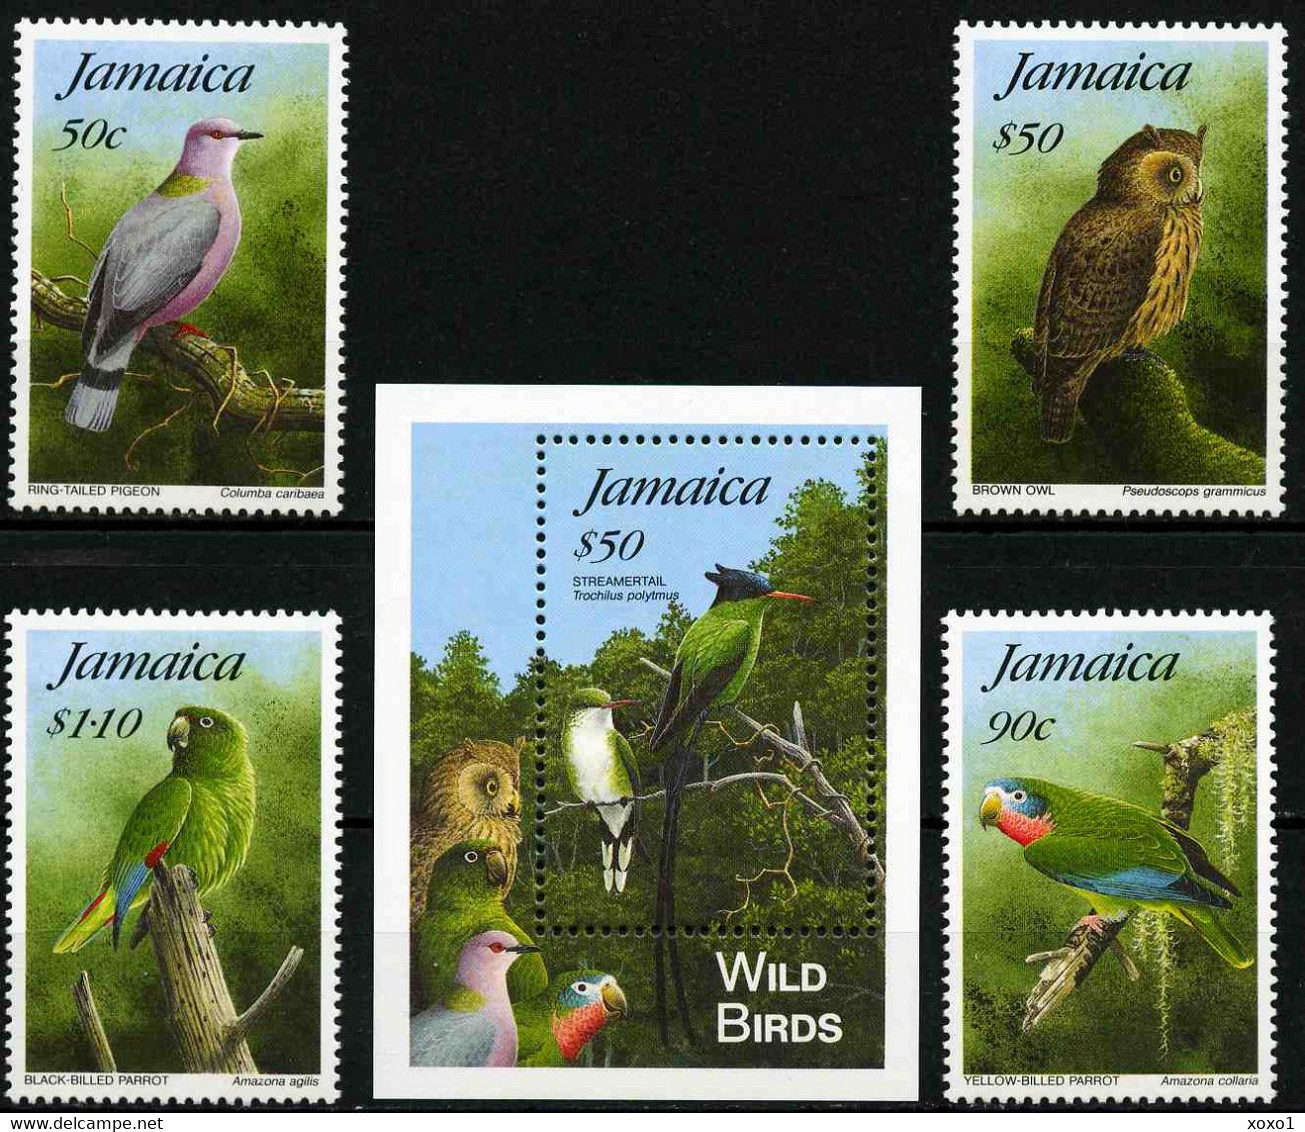 Jamaica 1995 MiNr. 852 - 855(Block 42) Jamaika Birds 4v+1bl MNH** 21,00 € - Búhos, Lechuza